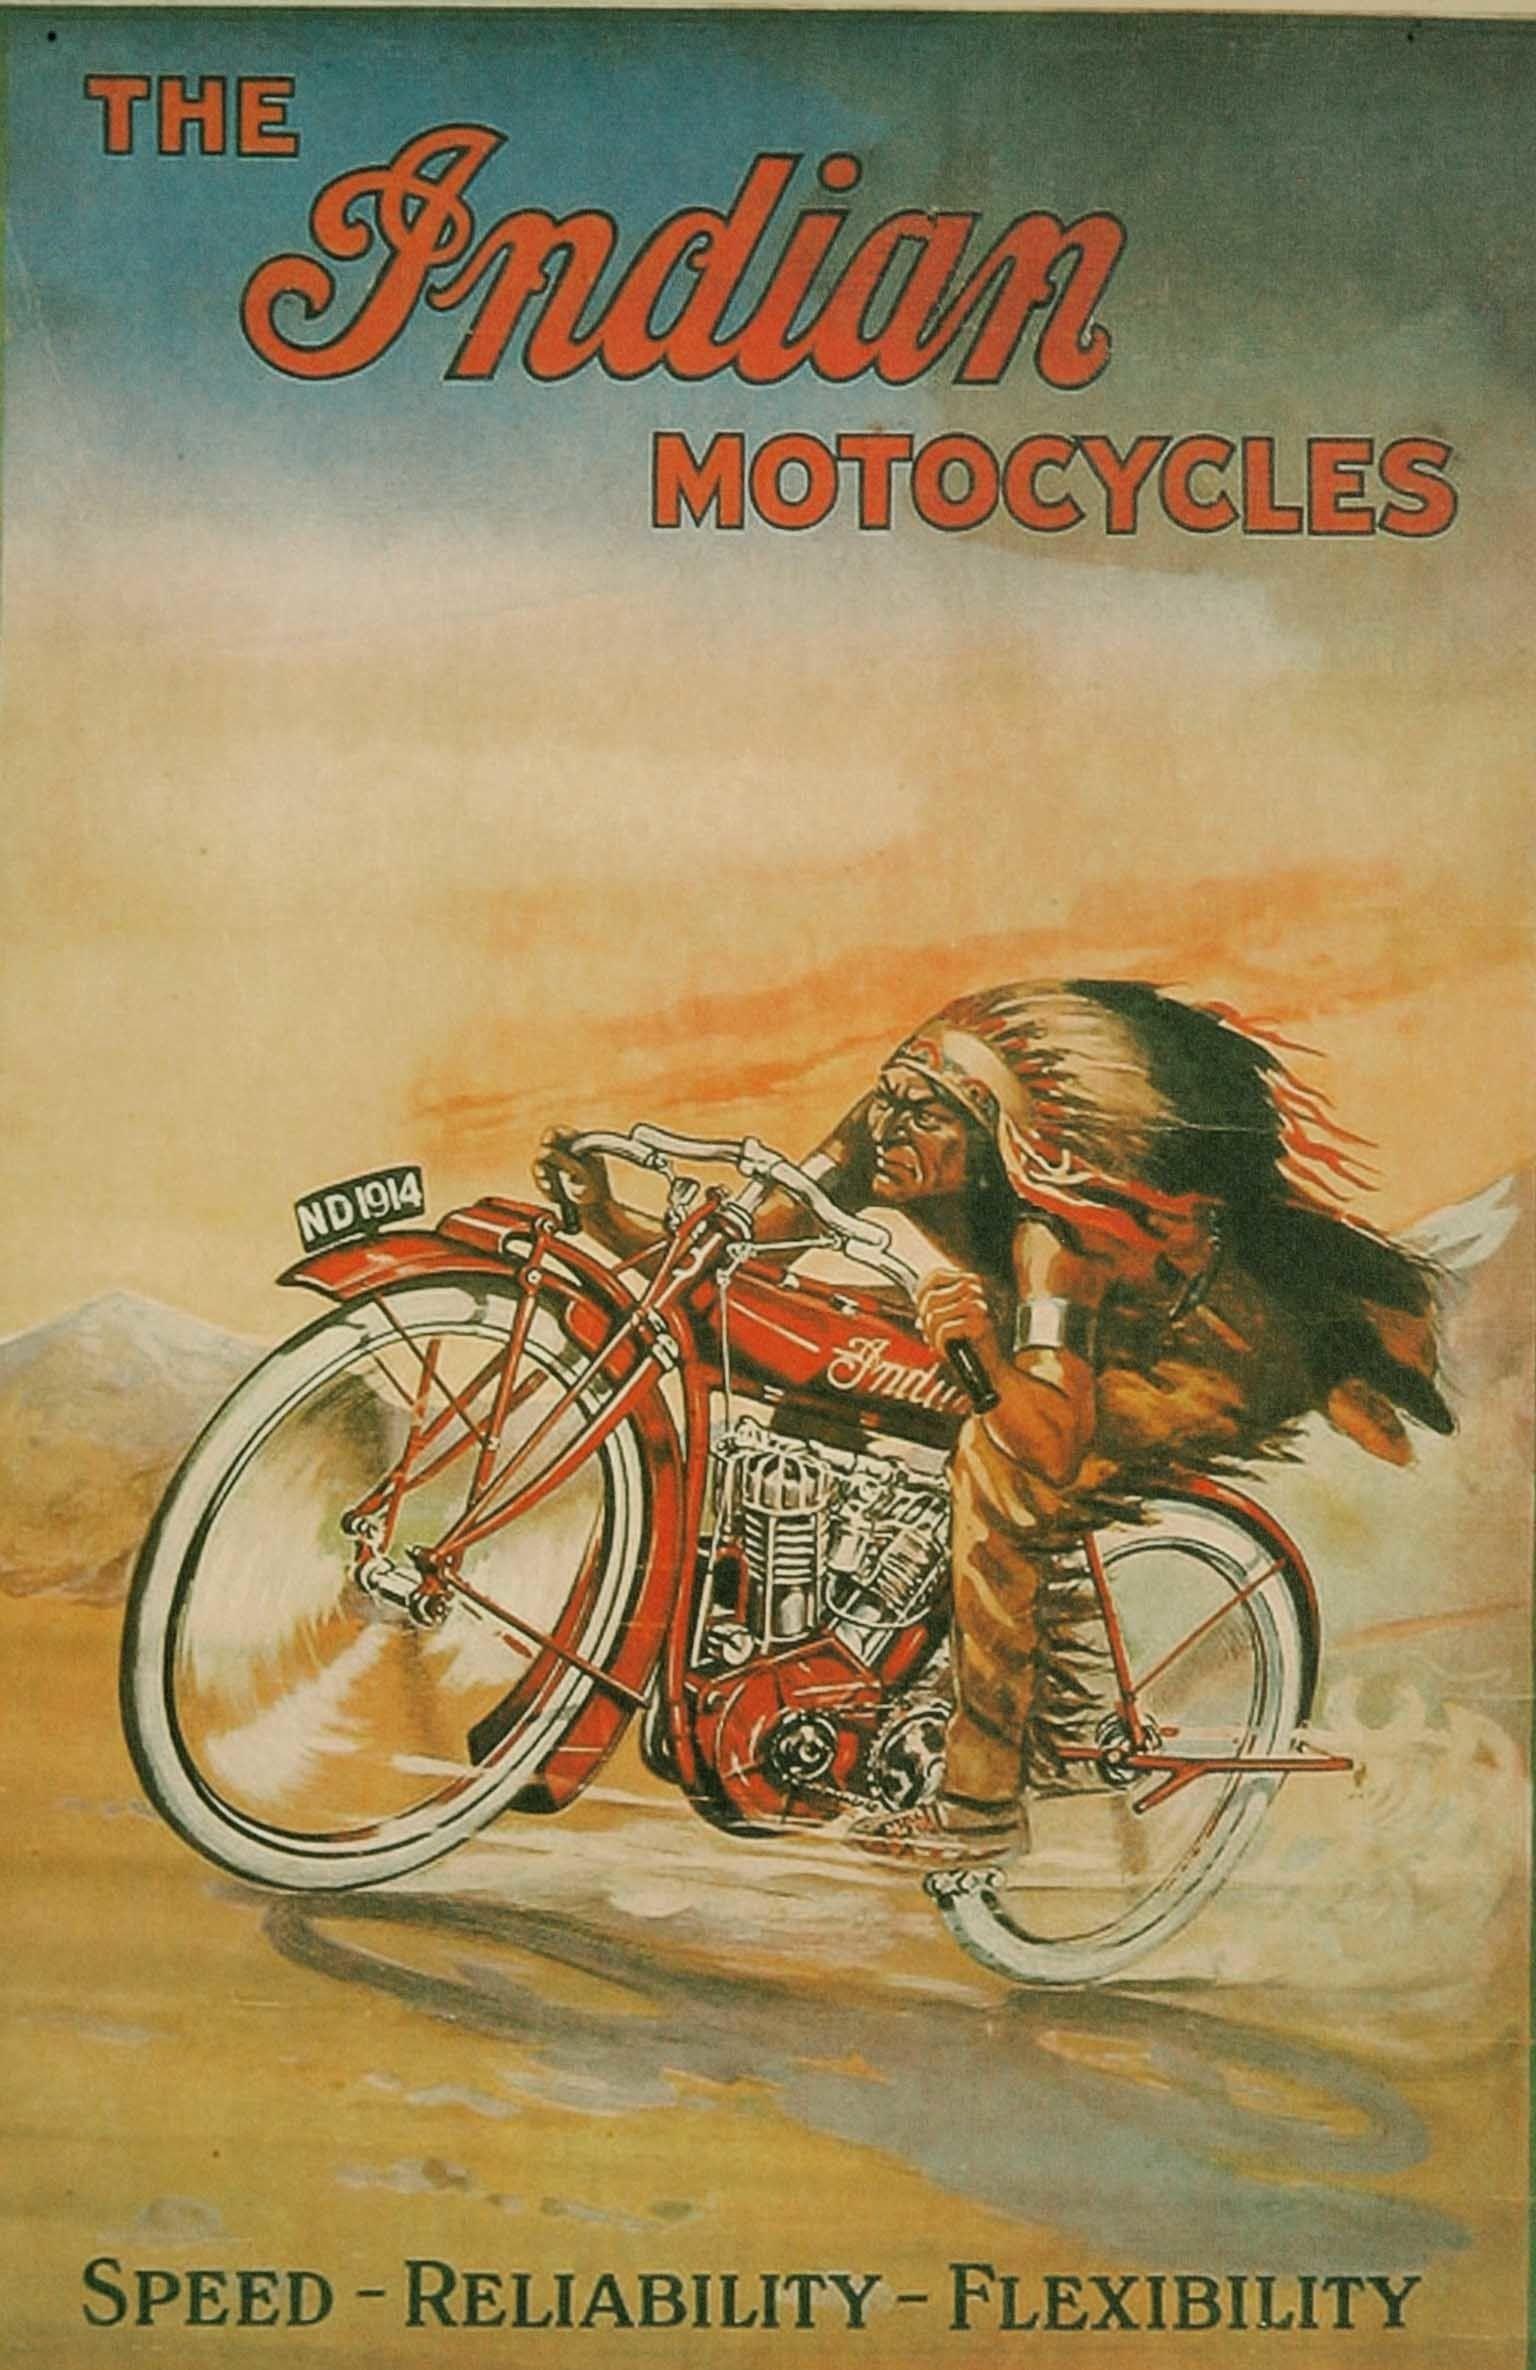 Indian Motorcycle Desktop Wallpaper